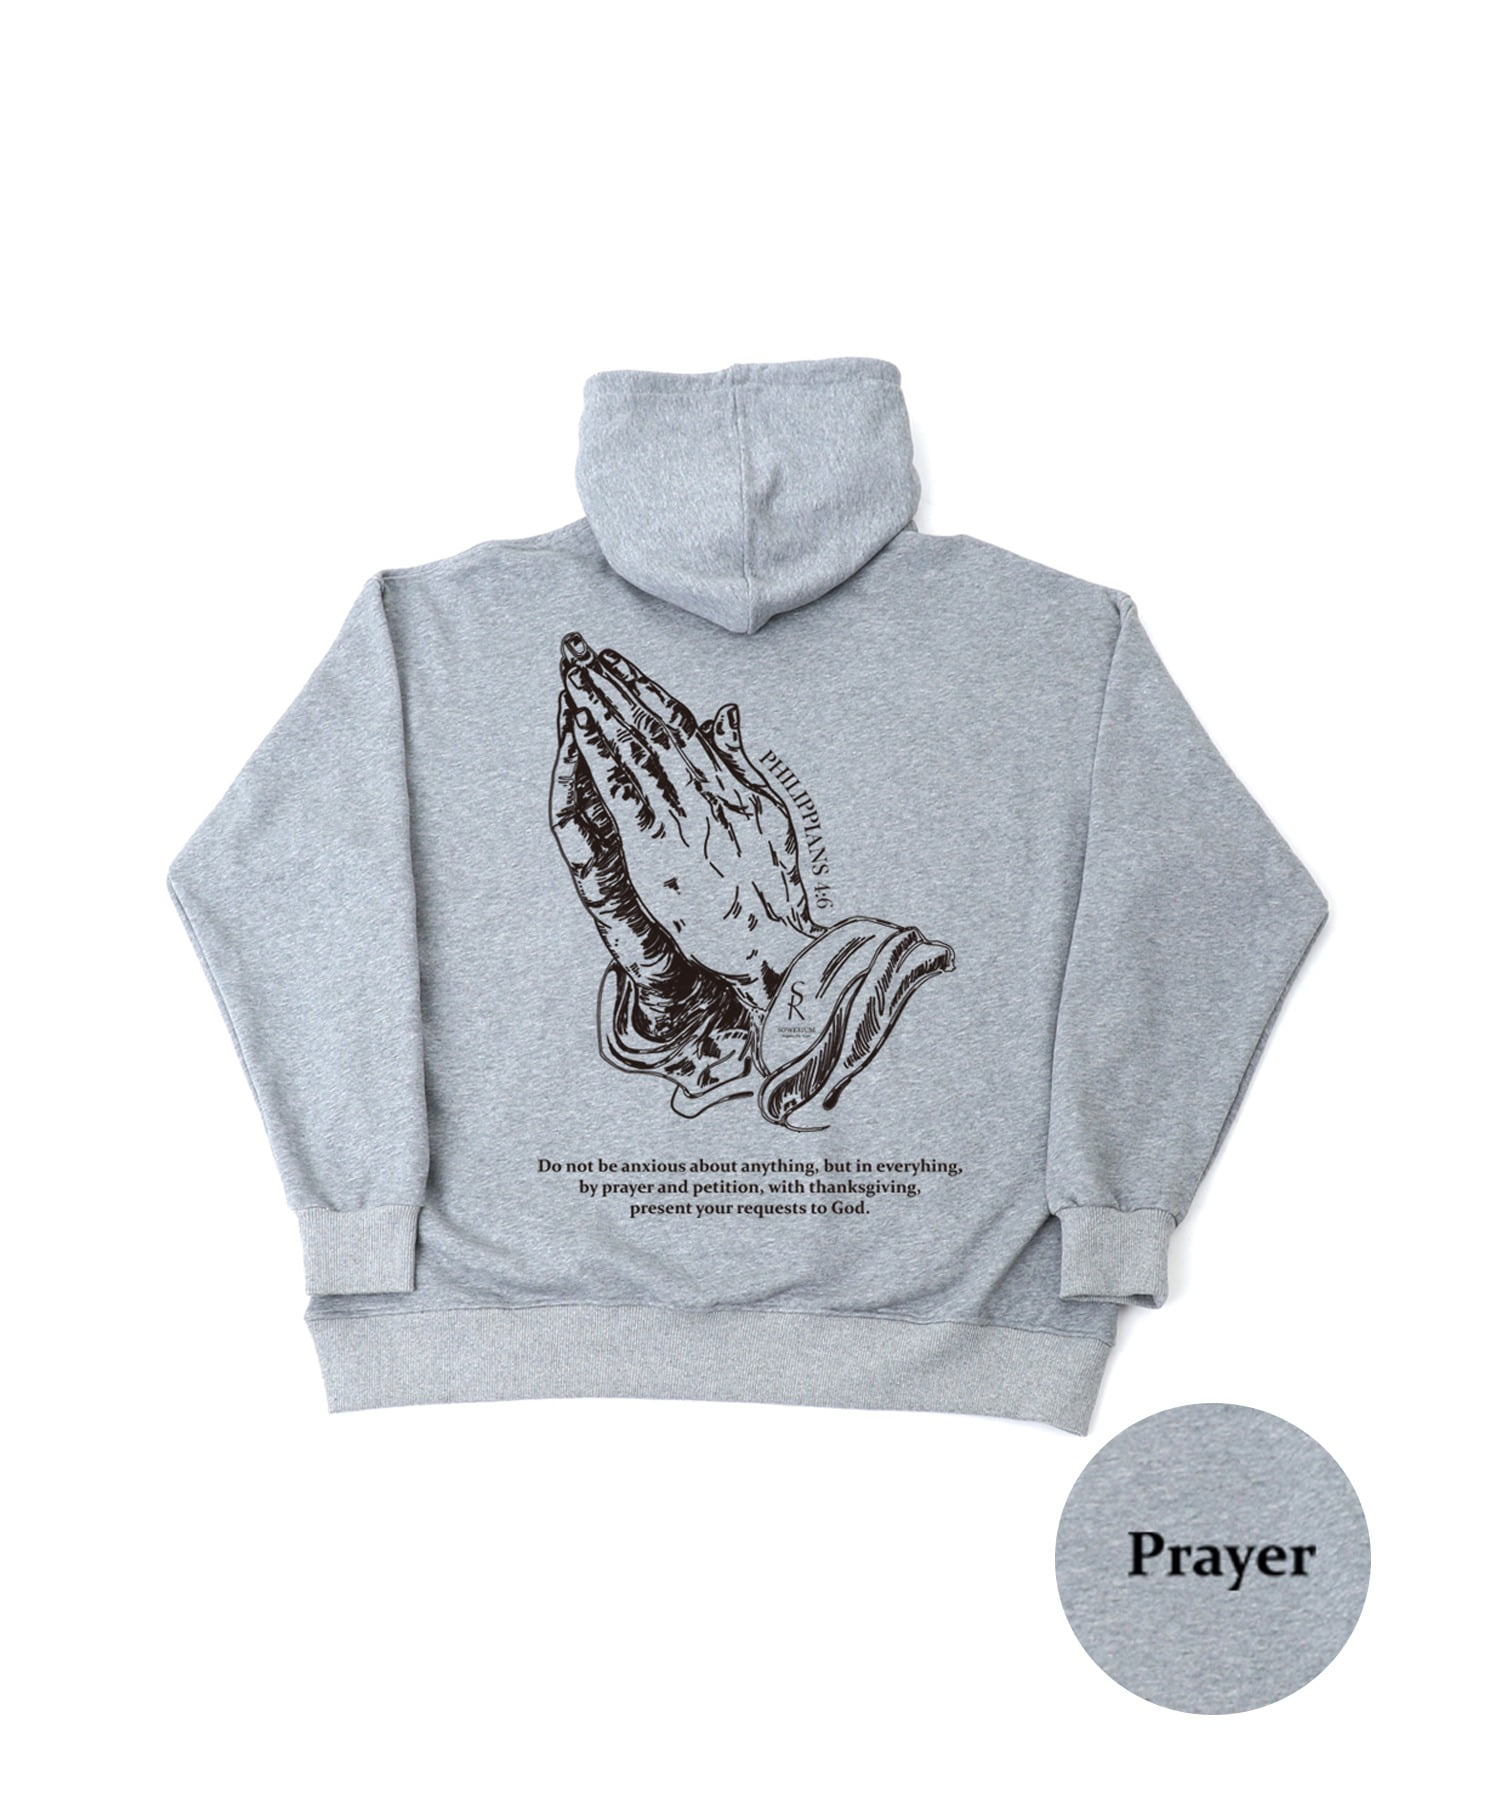 Prayer Hoody Gray